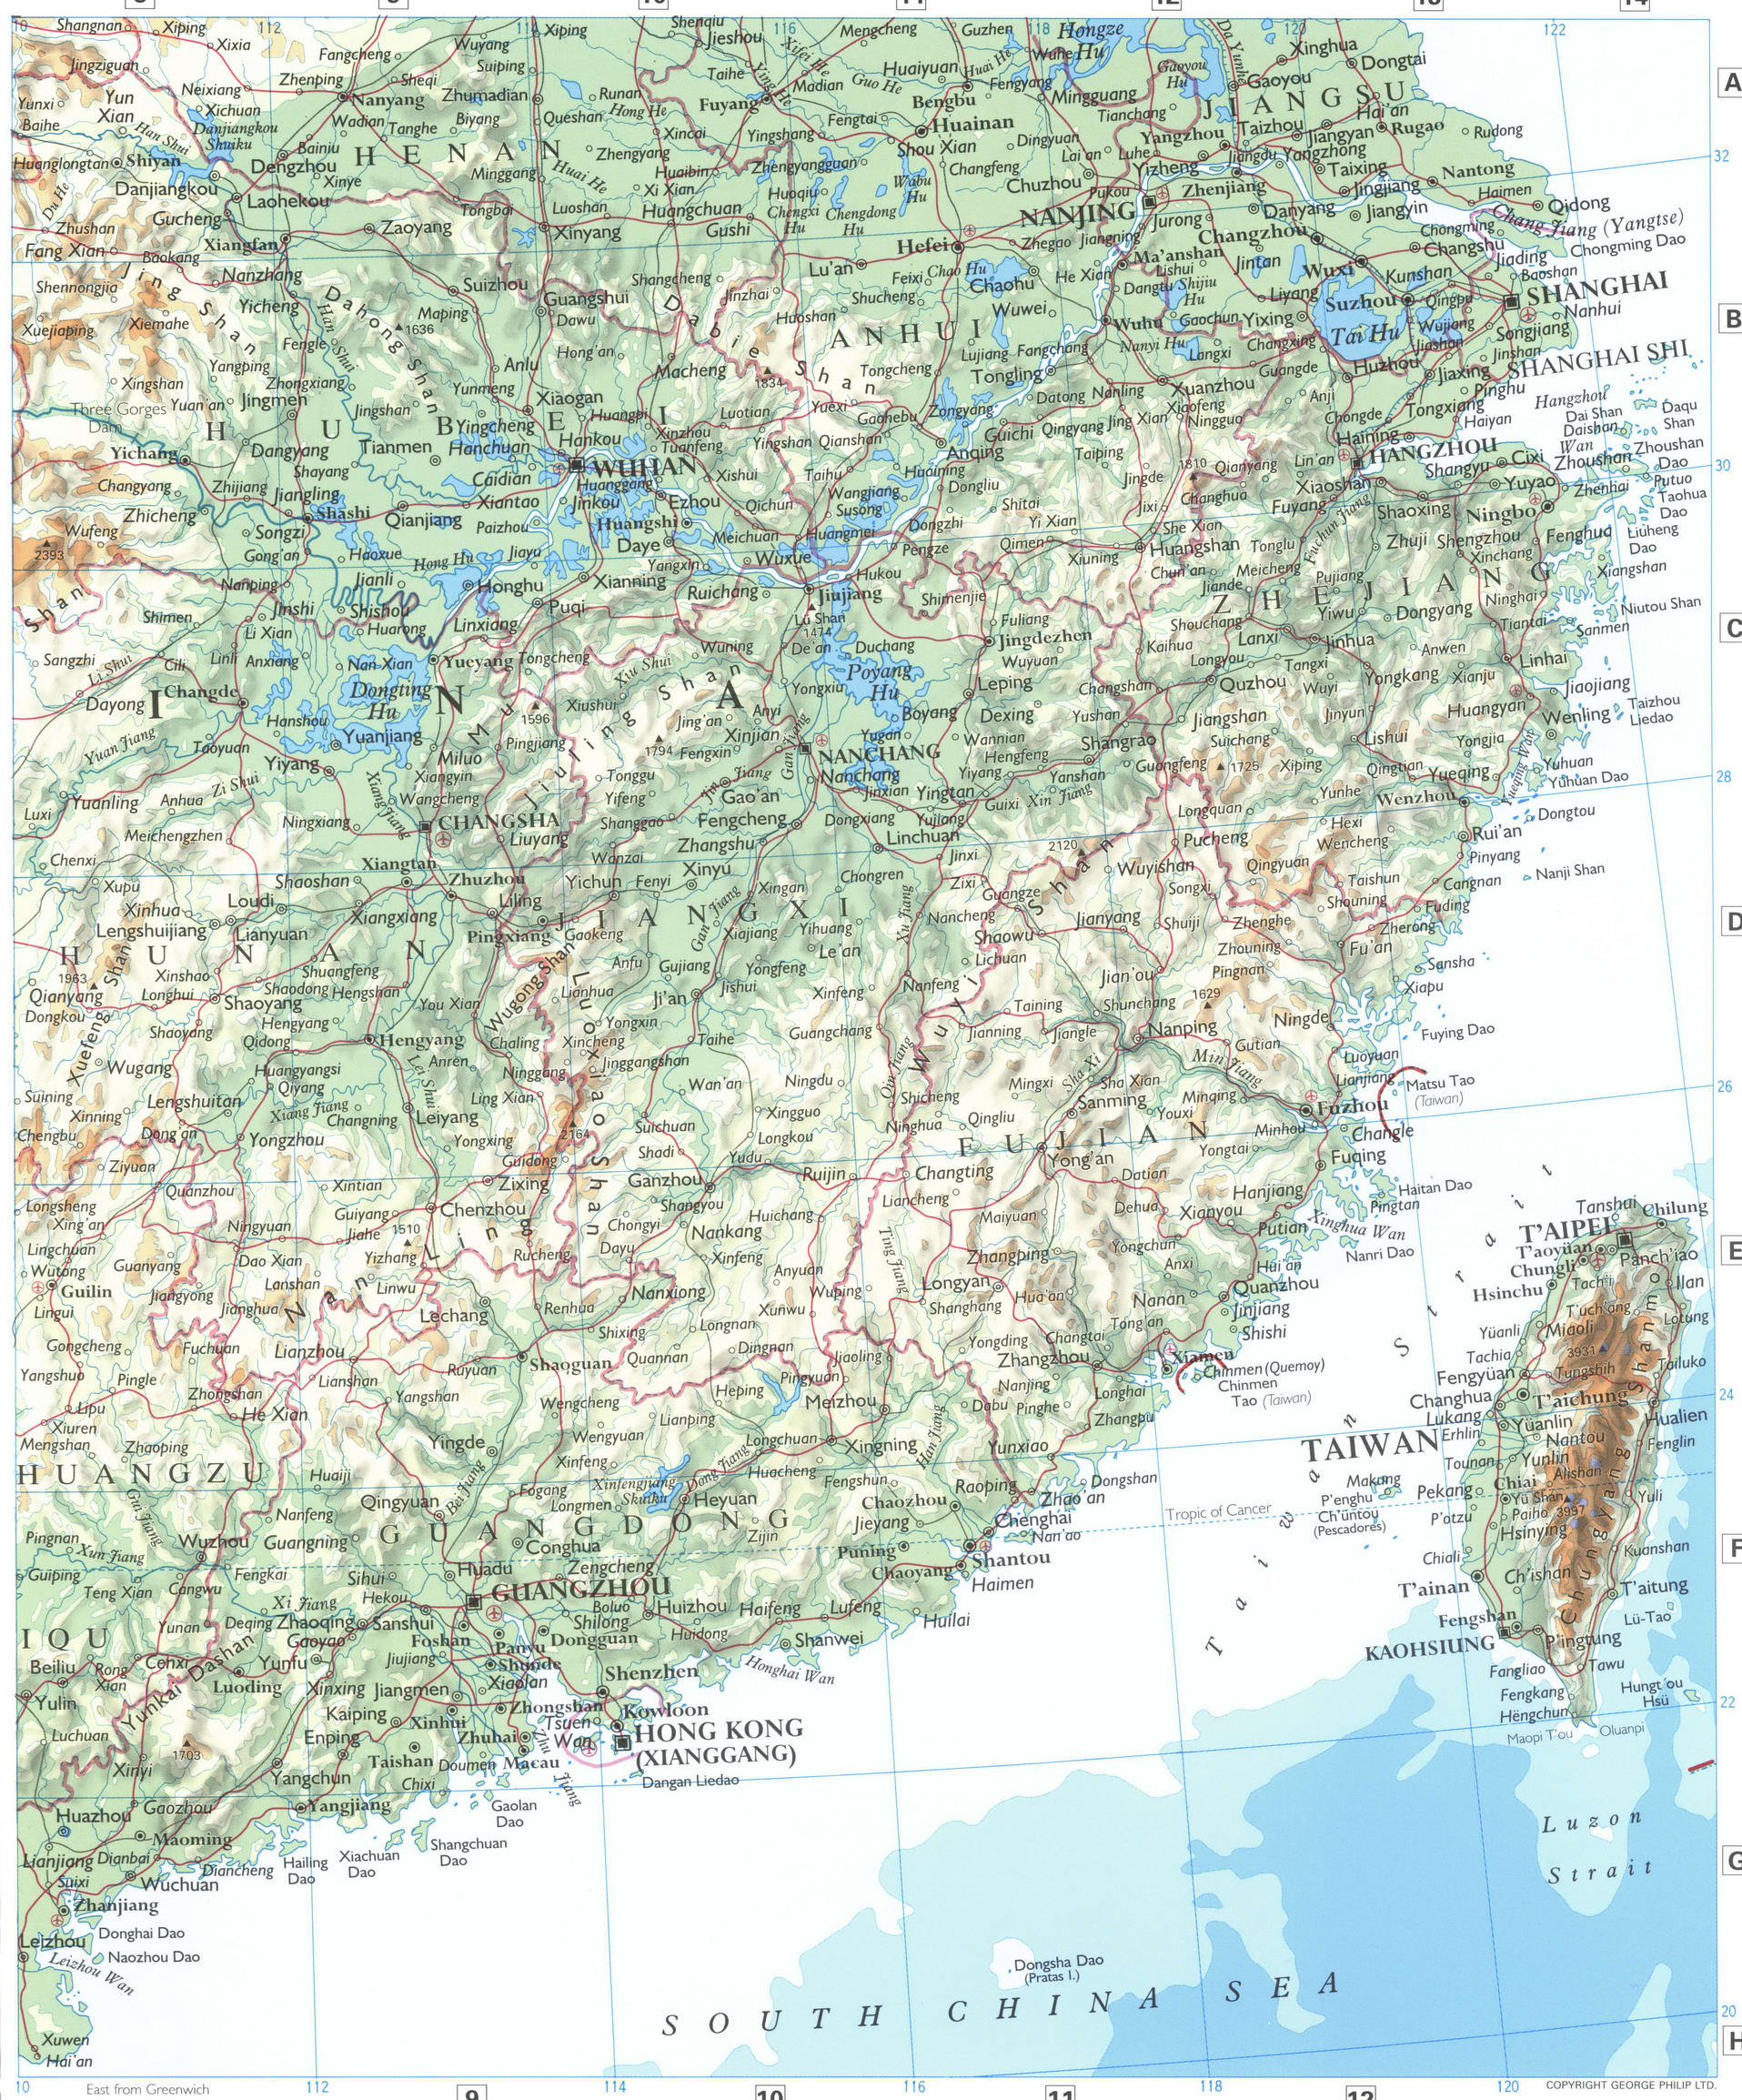 Southern China and Taiwan map